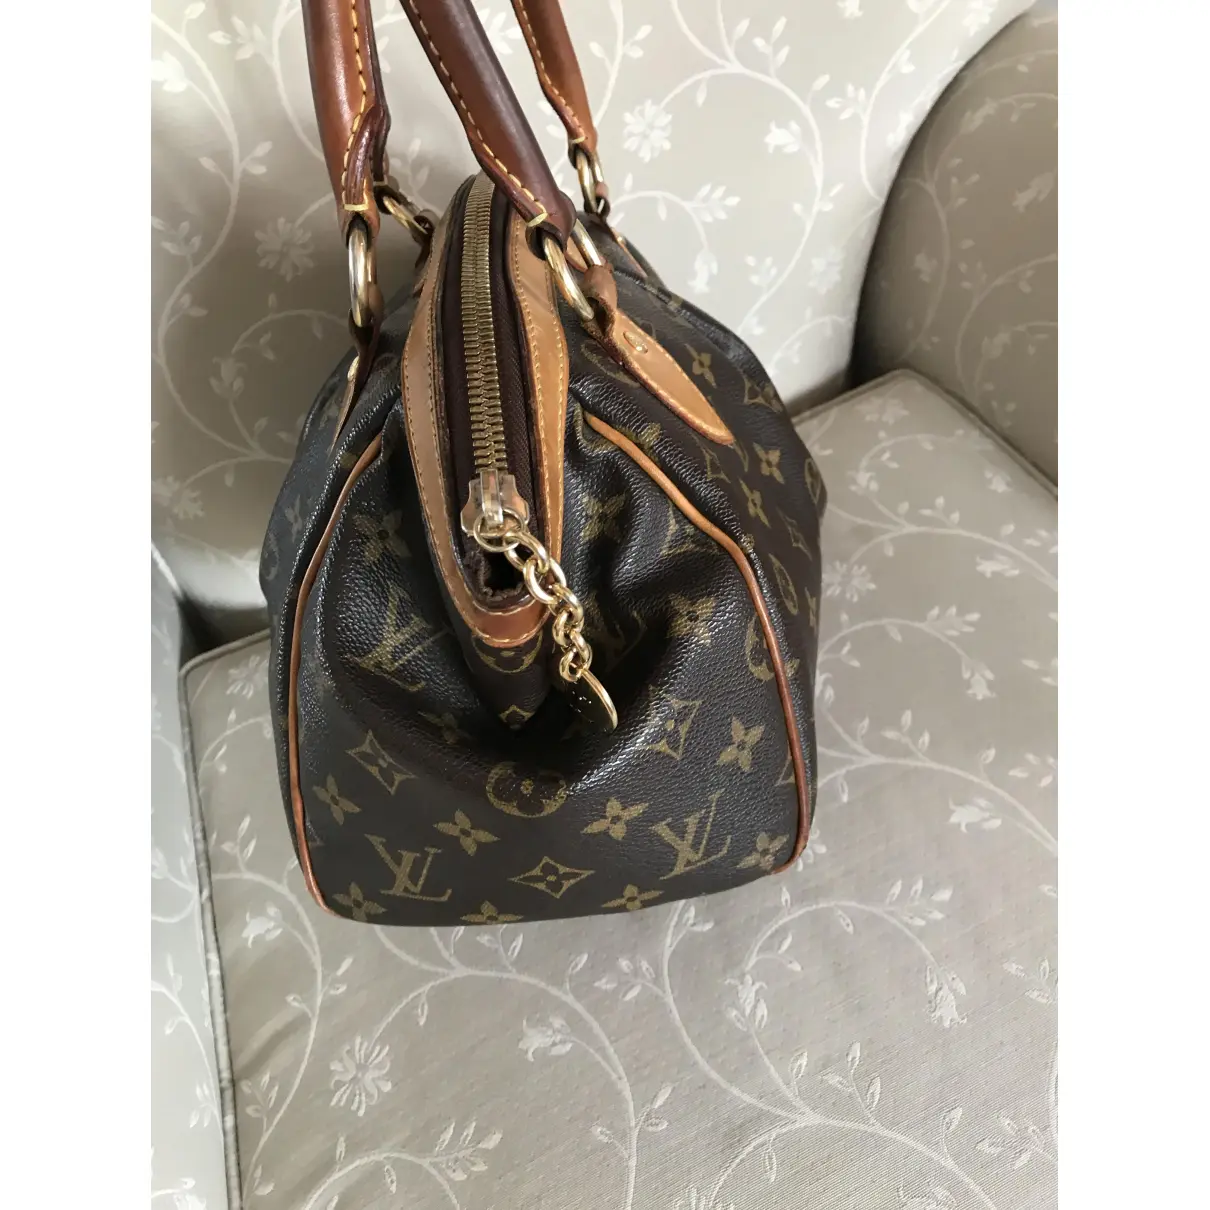 Buy Louis Vuitton Tivoli cloth handbag online